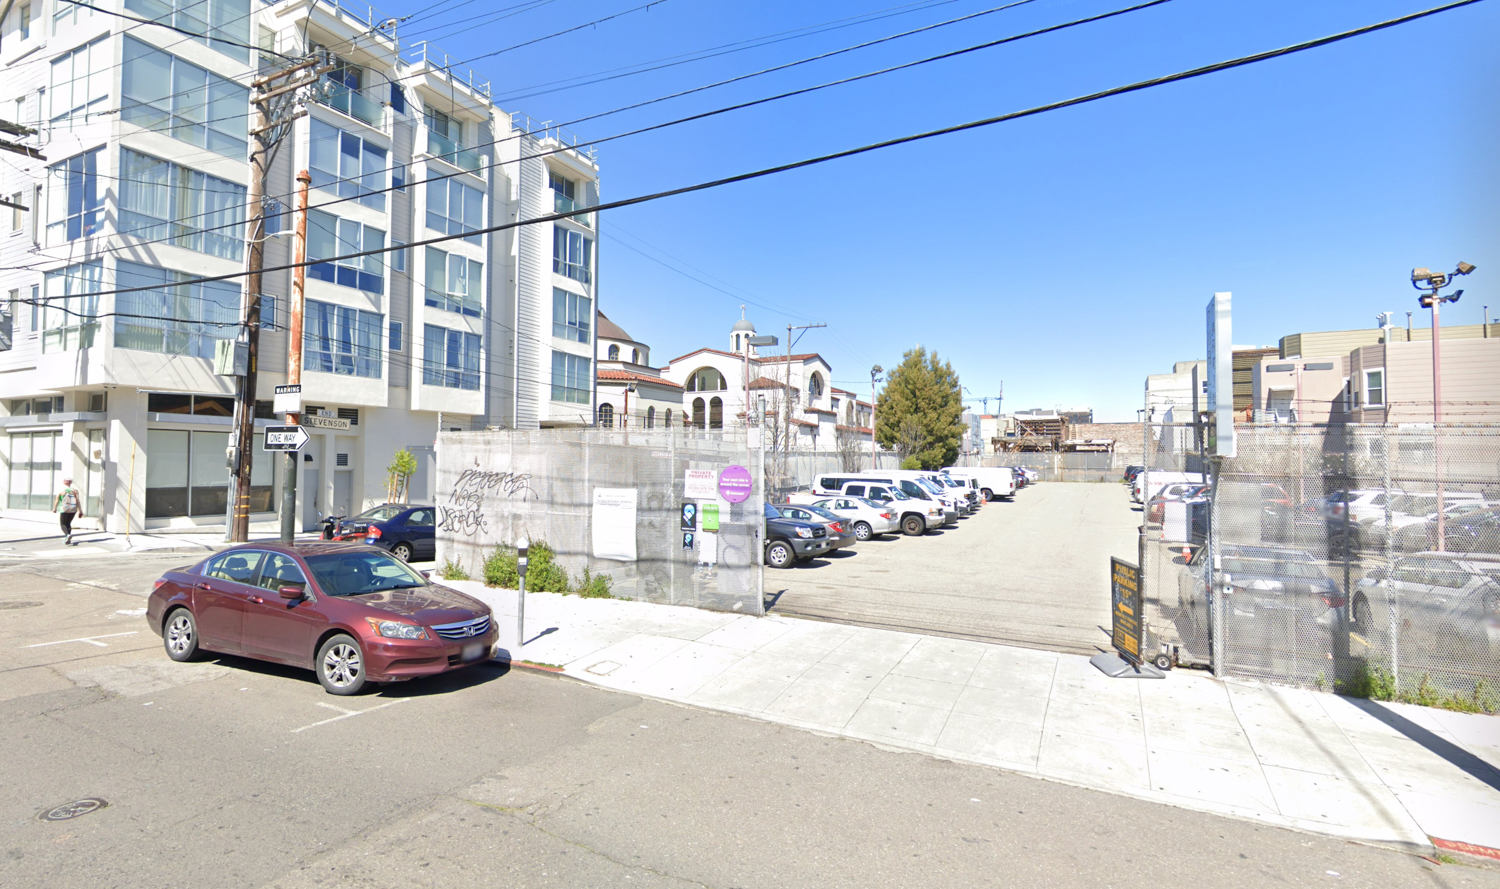 344 14th Street lot, image via Google Street View